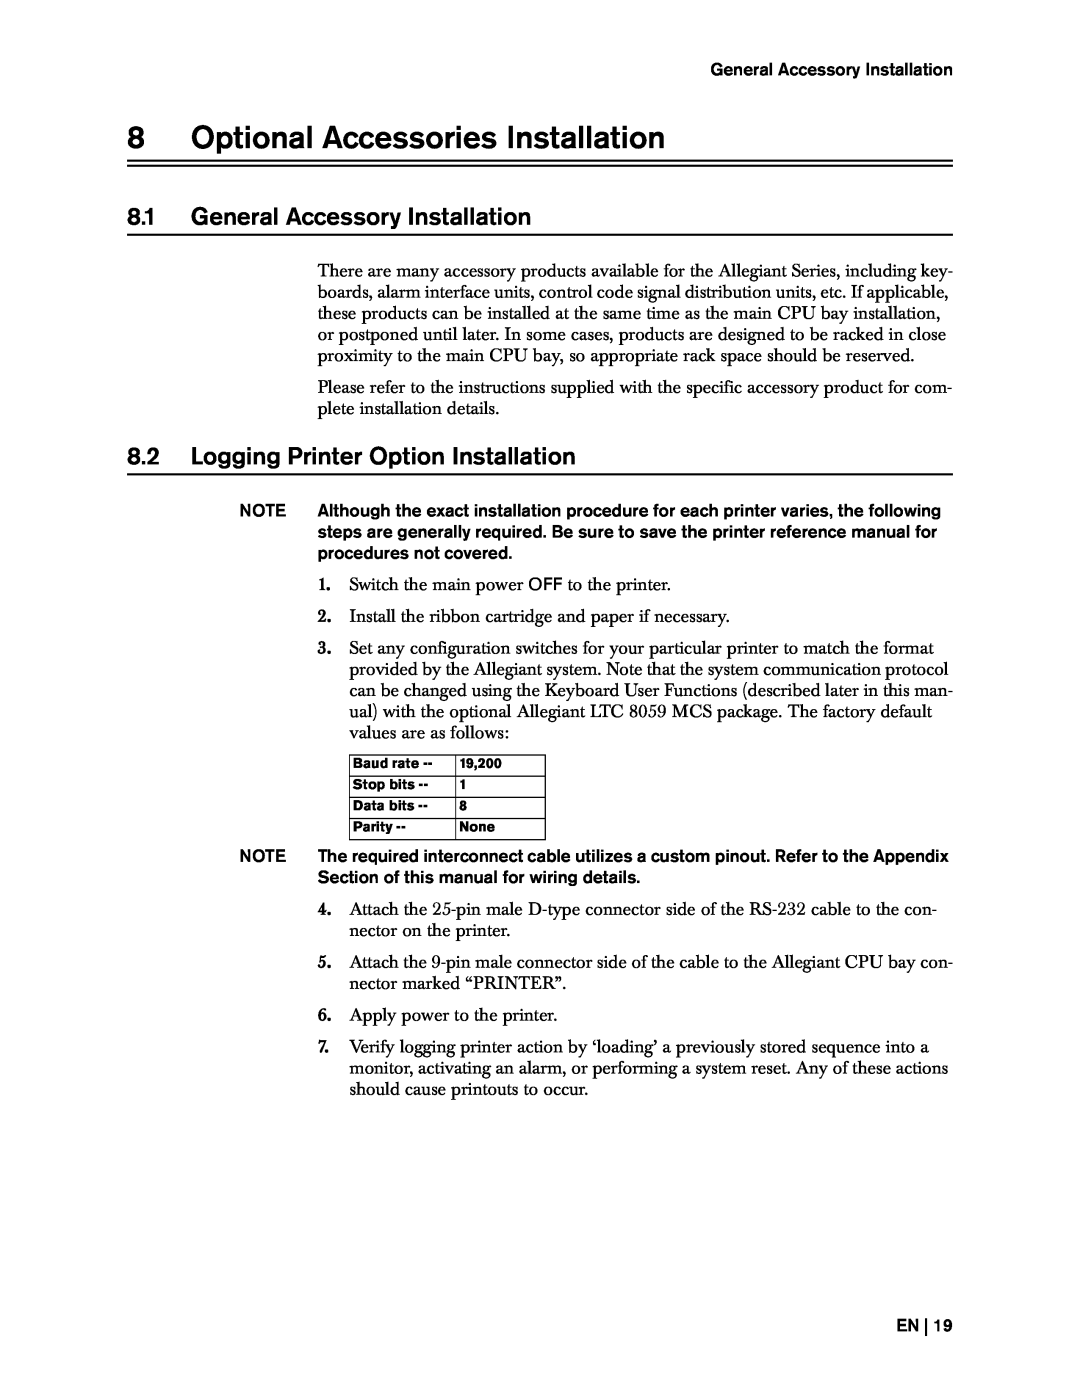 Bosch Appliances 8500, LTC instruction manual 8Optional Accessories Installation, 8.1General Accessory Installation 